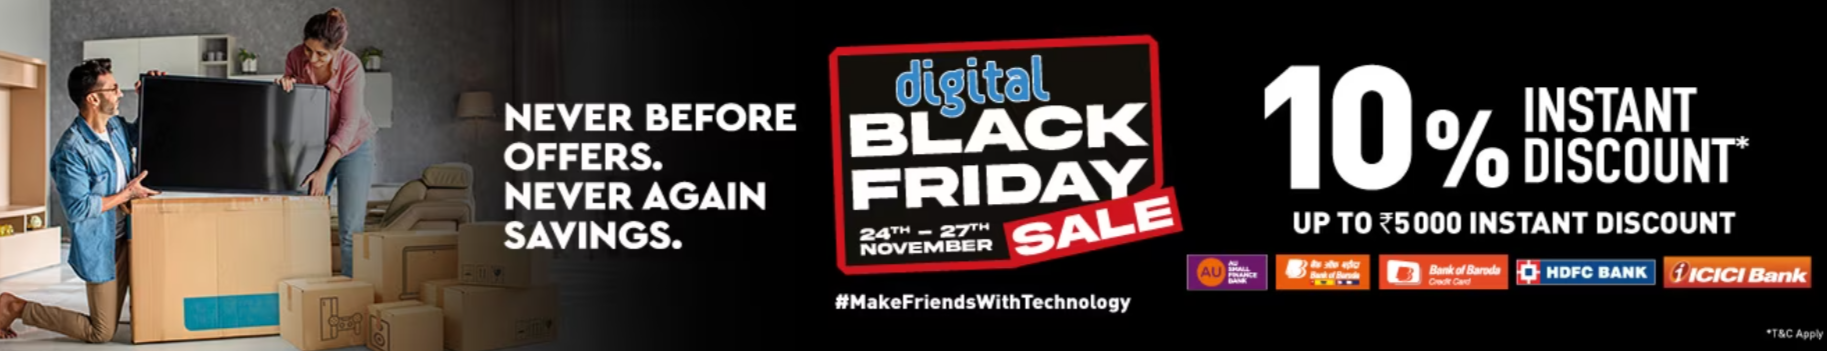 Reliance Digital Black Friday Sale